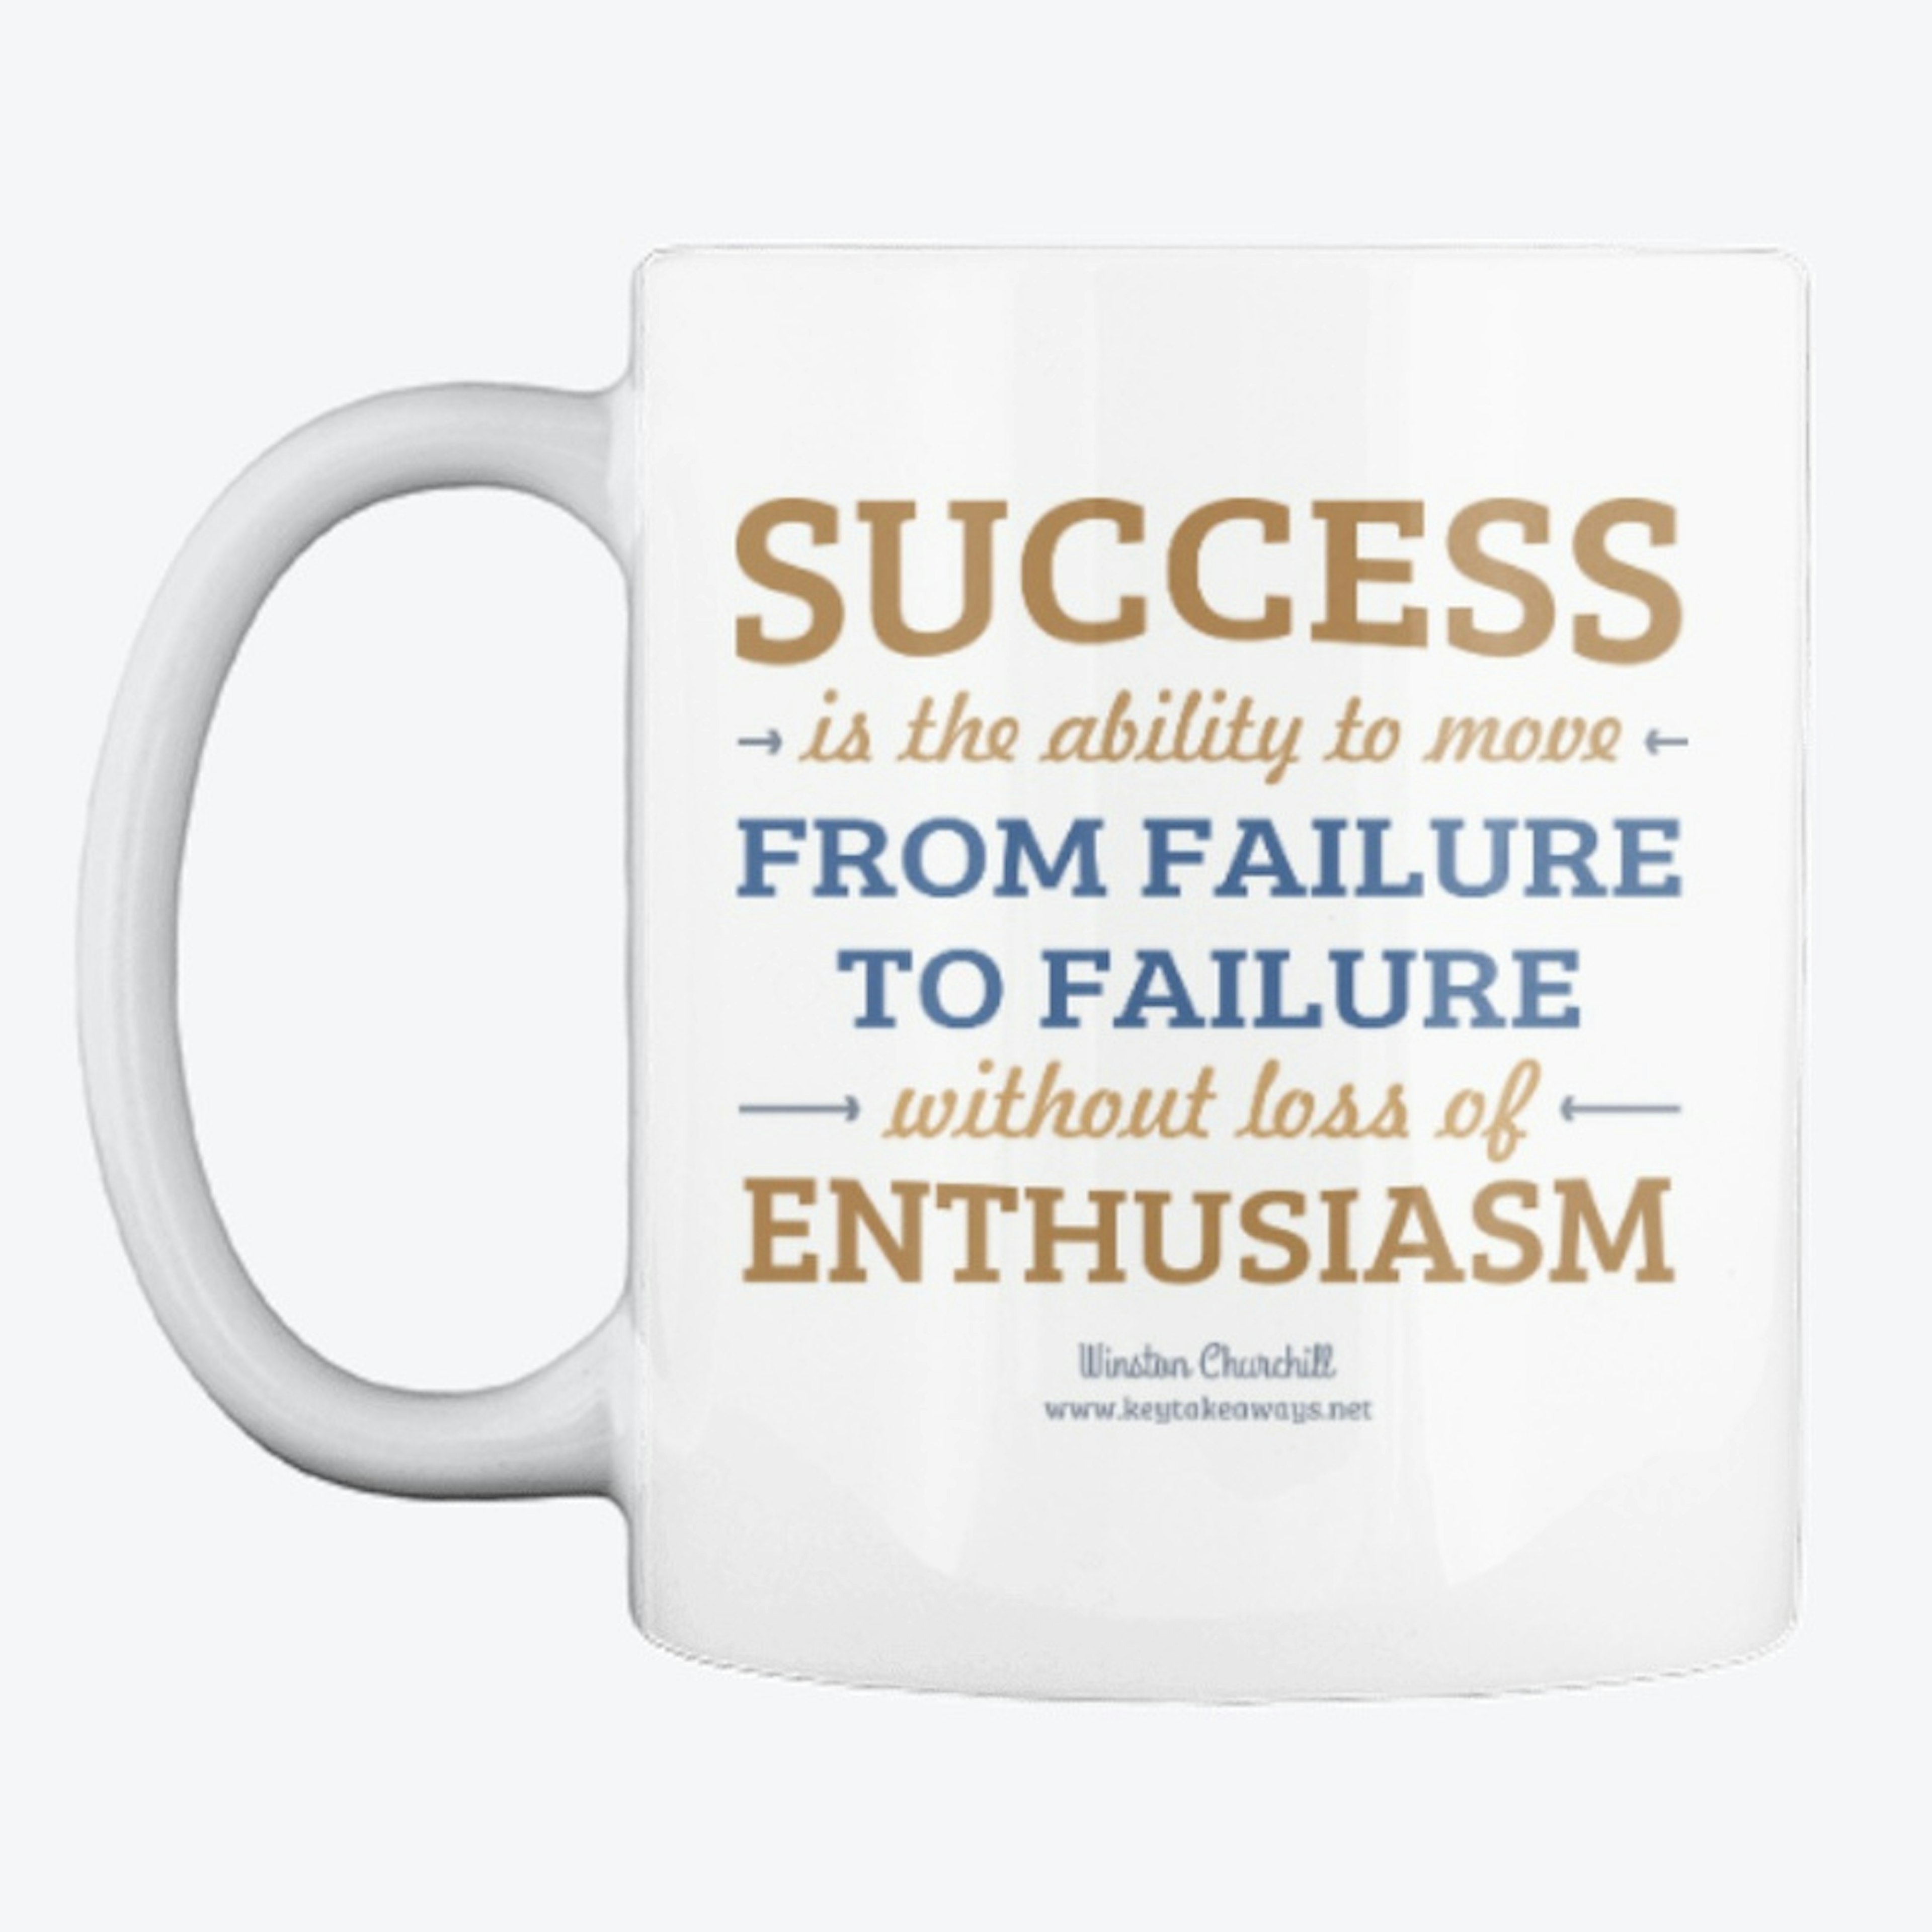 Success - Enthusiasm